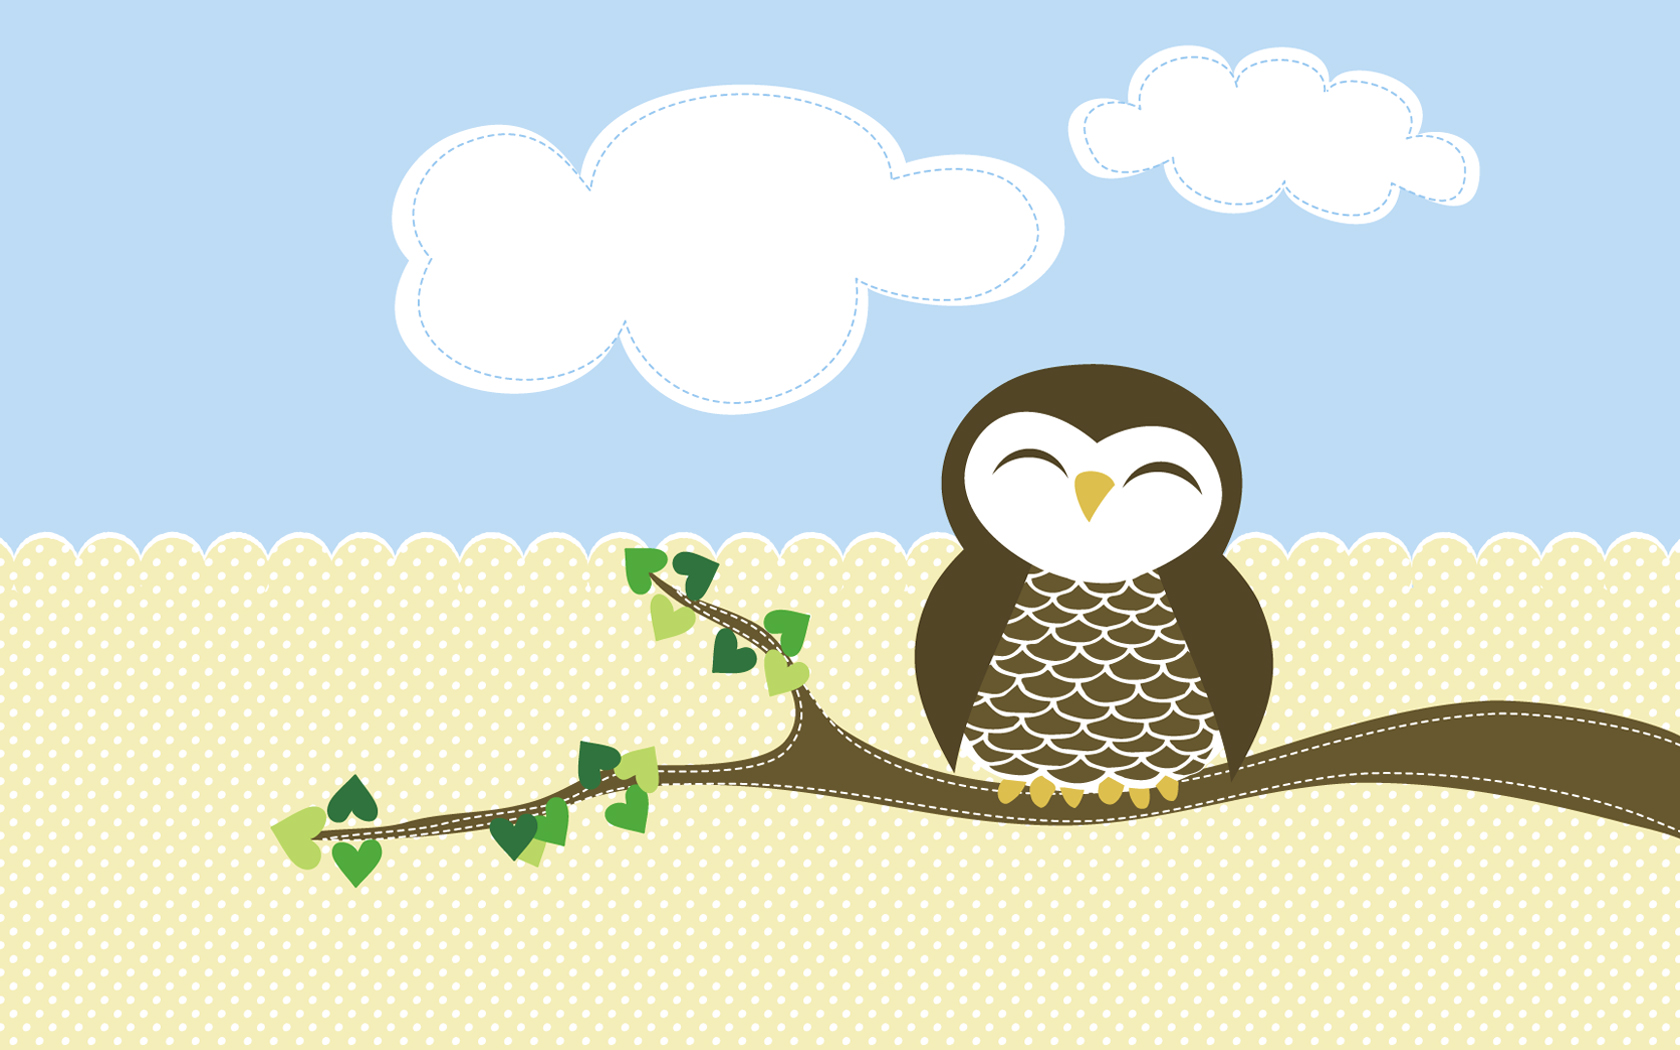 Cute Owl Wallpaper Desktop Images Amp Pictures Becuo